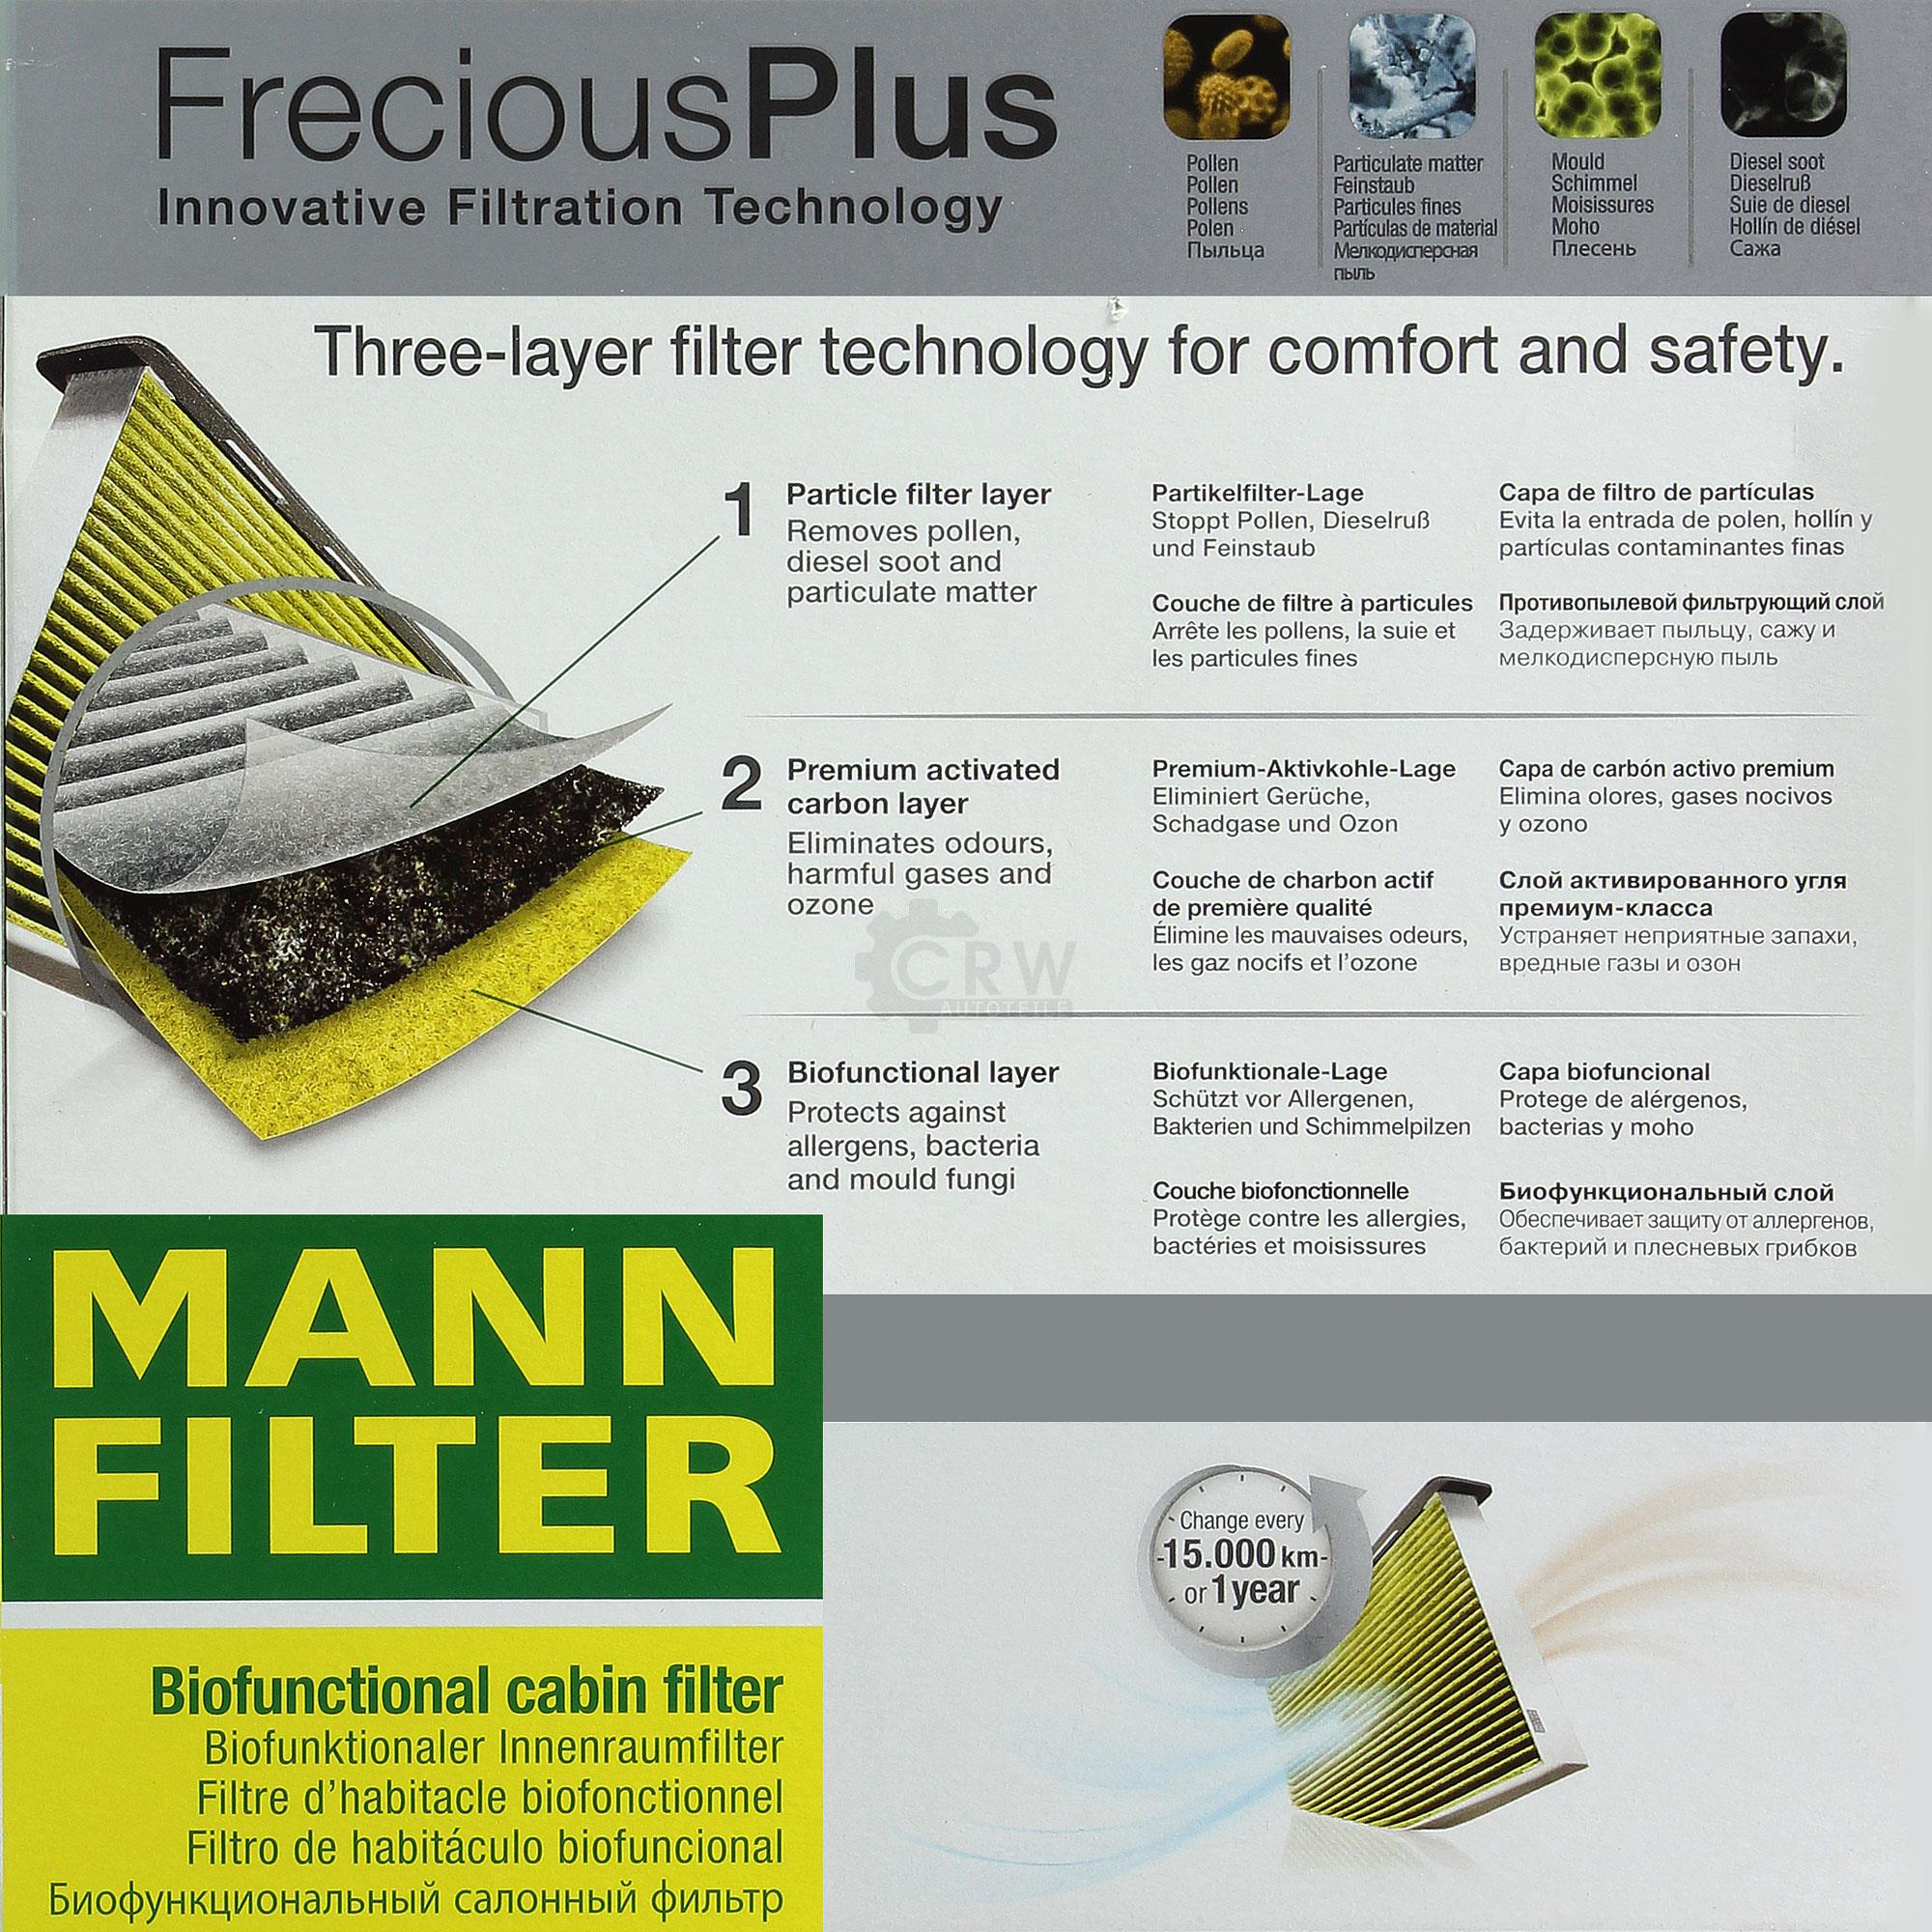 MANN-Filter Innenraumfilter Biofunctional für Allergiker FP 22 021